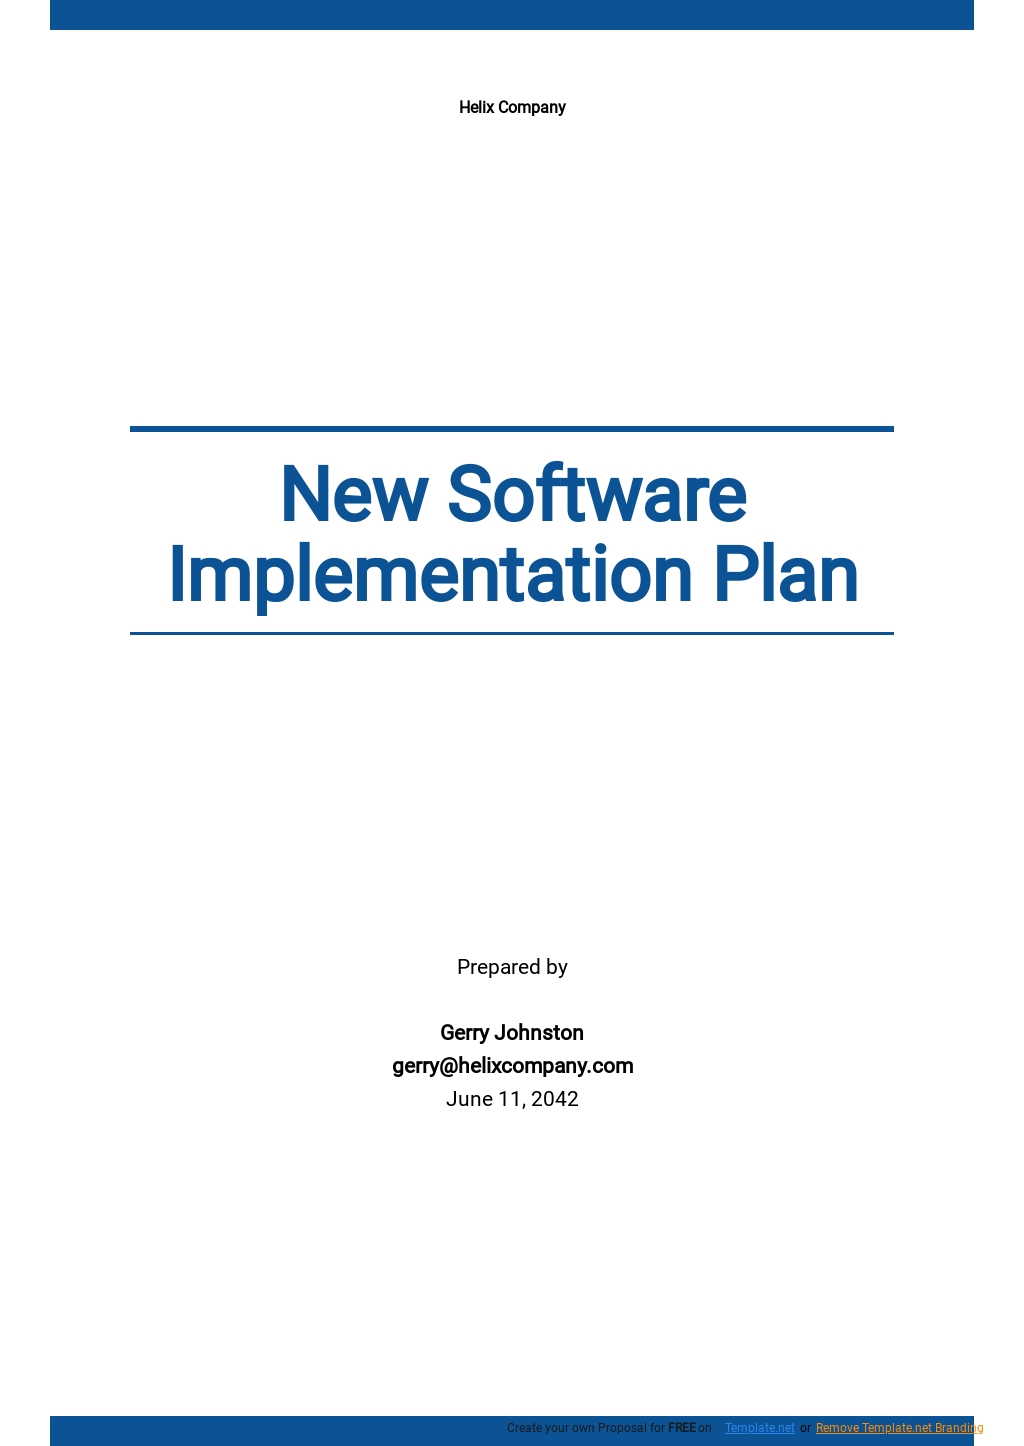 New Software Implementation Plan Template.jpe